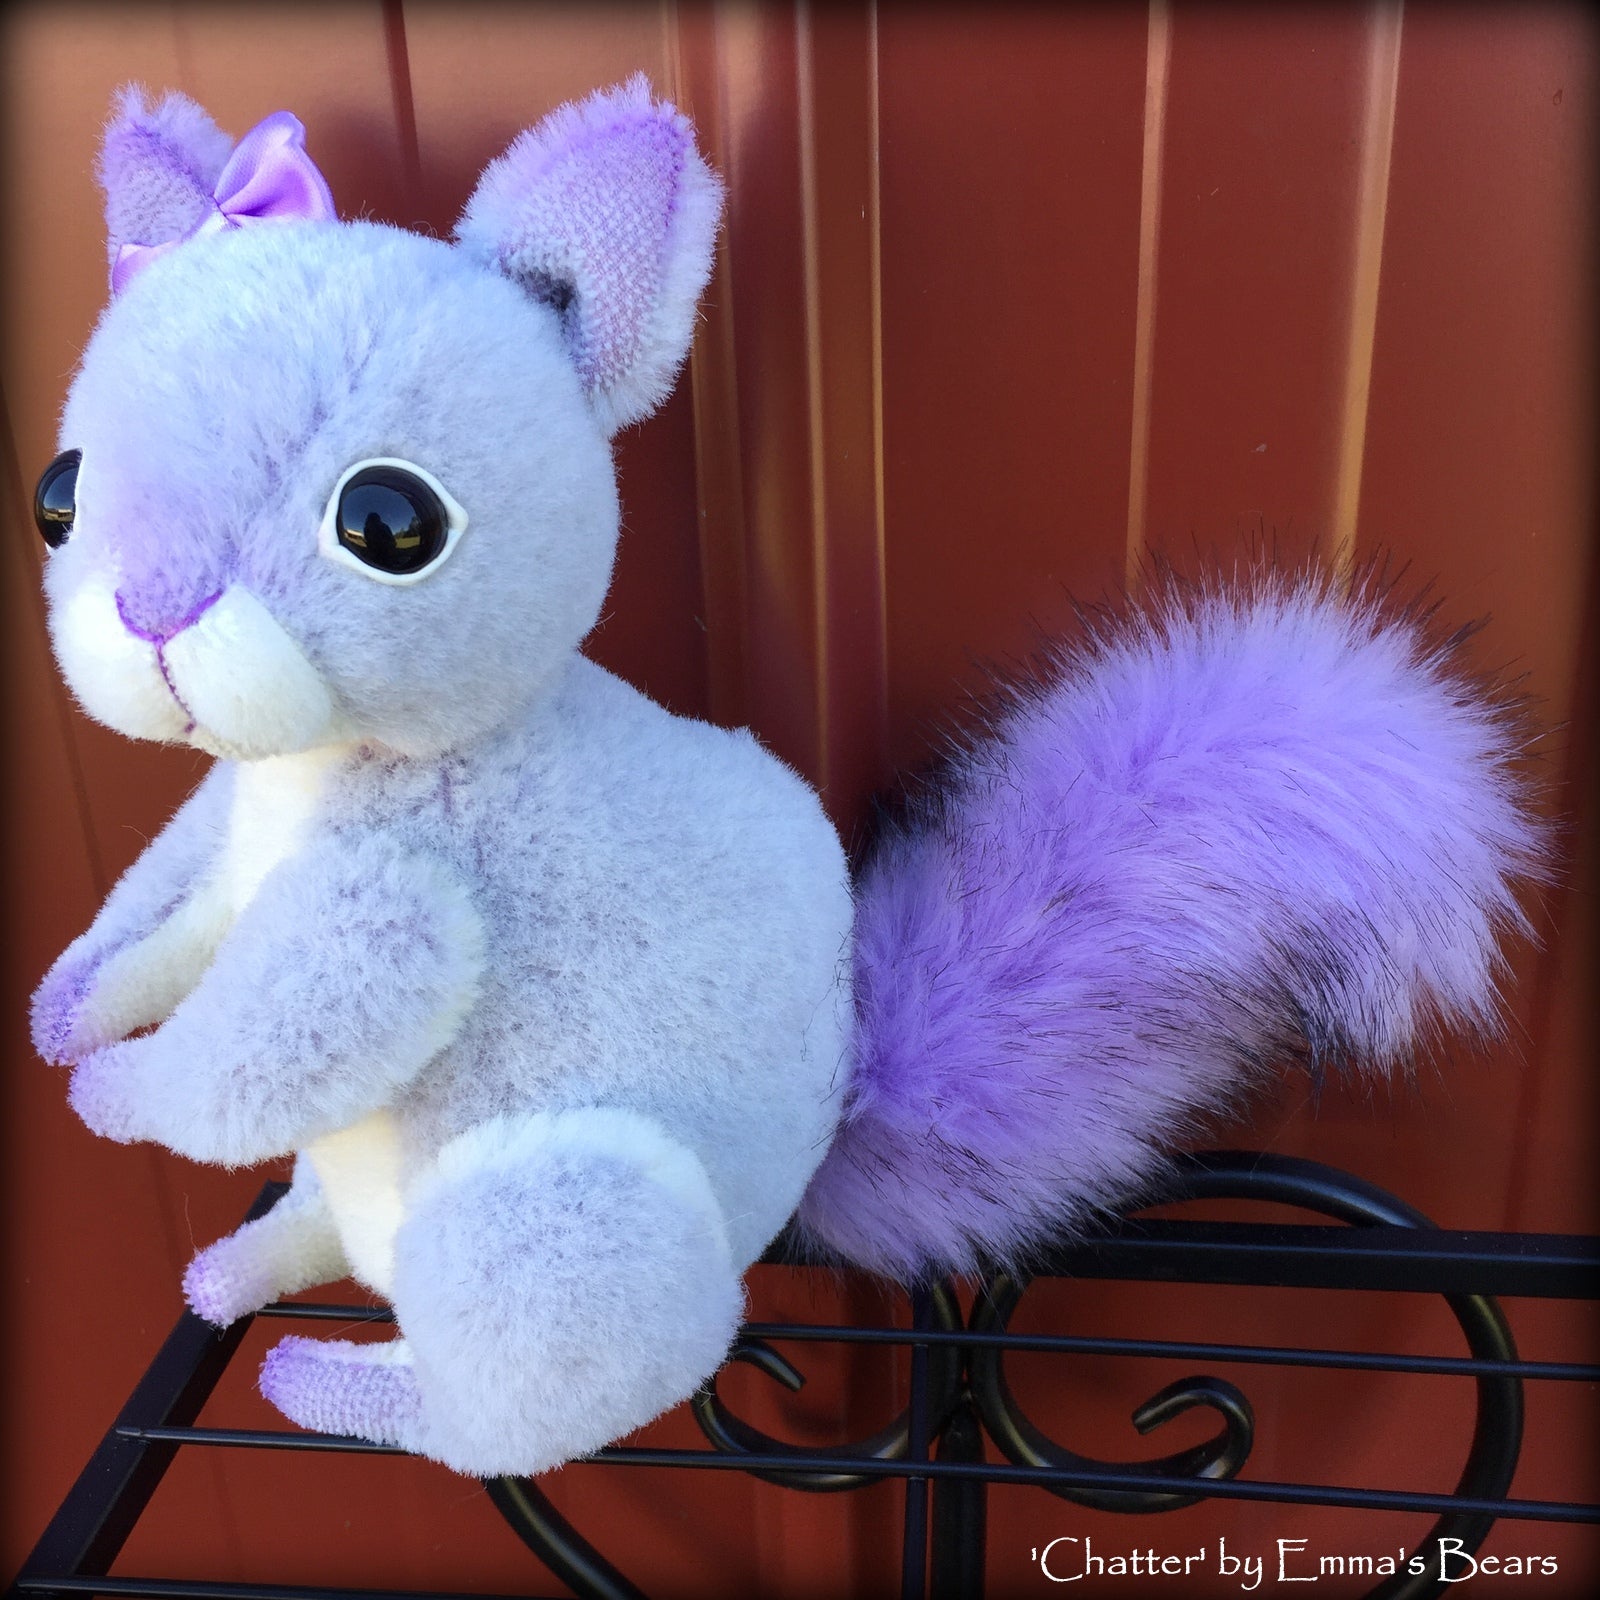 Chatter - 6in Hand-dyed alpaca Artist Squirrel by Emmas Bears - OOAK